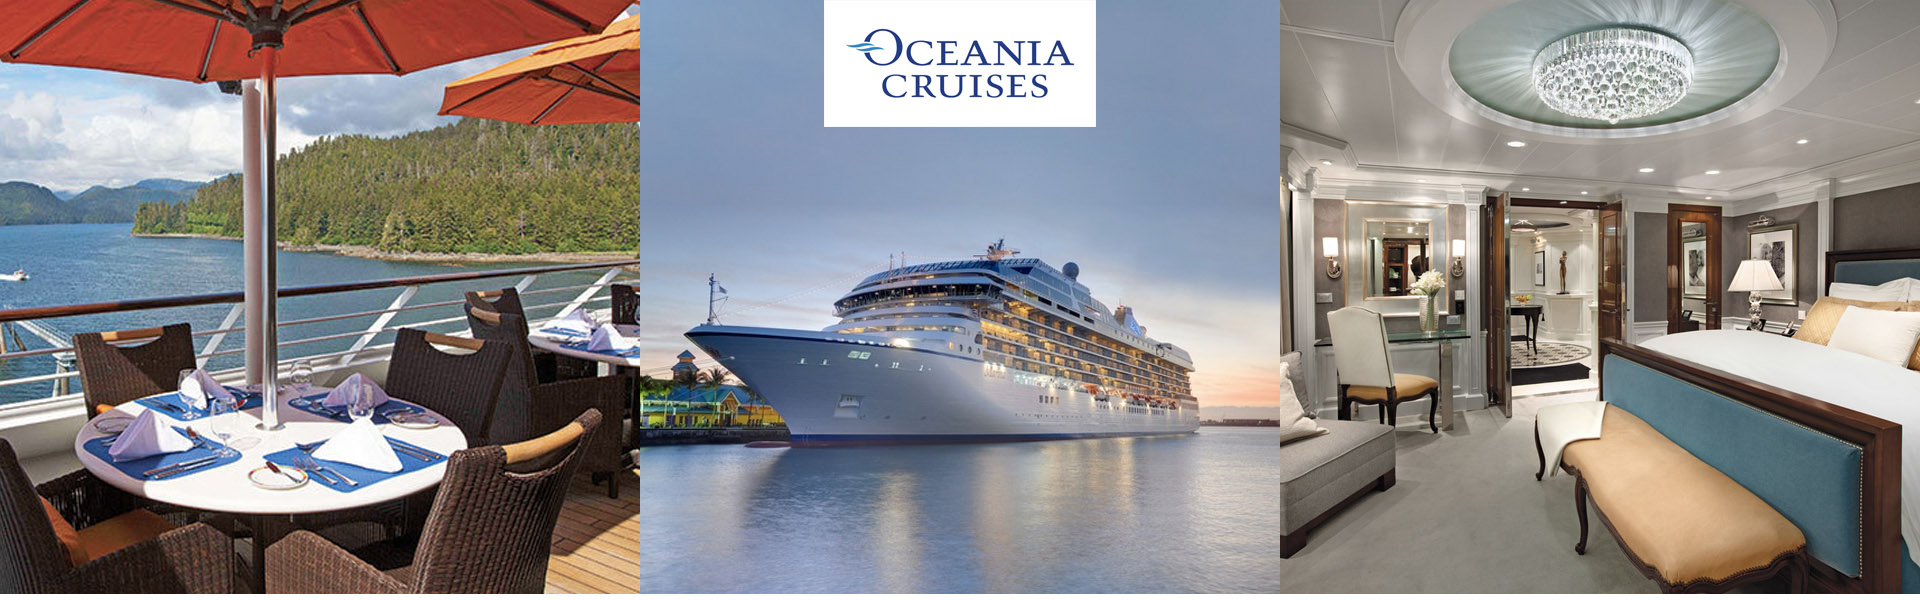 Oceania Cruise Ships